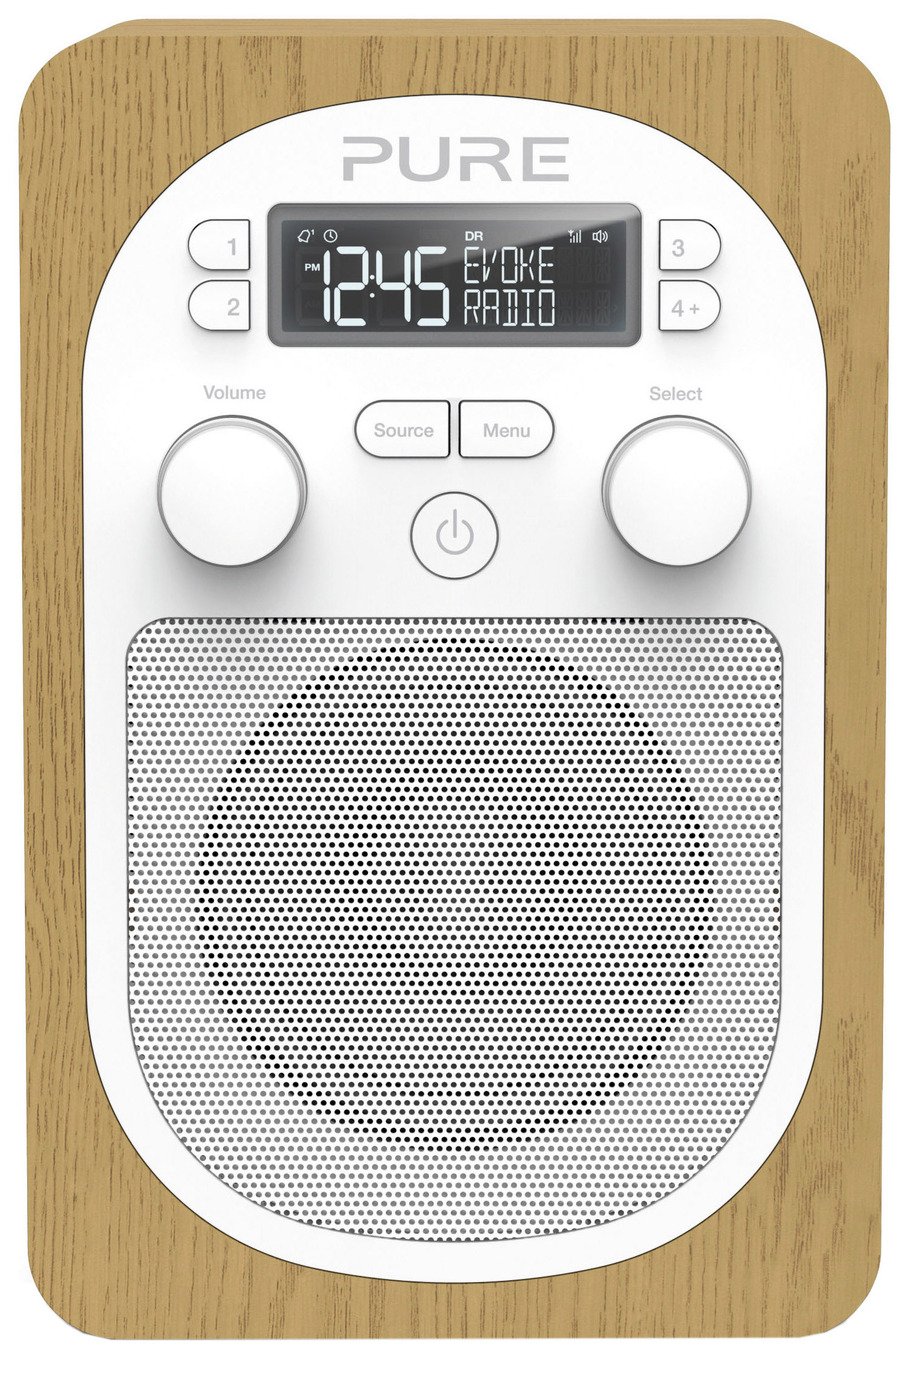 Pure Evoke H2 Portable DAB+/FM Radio with Alarm Review